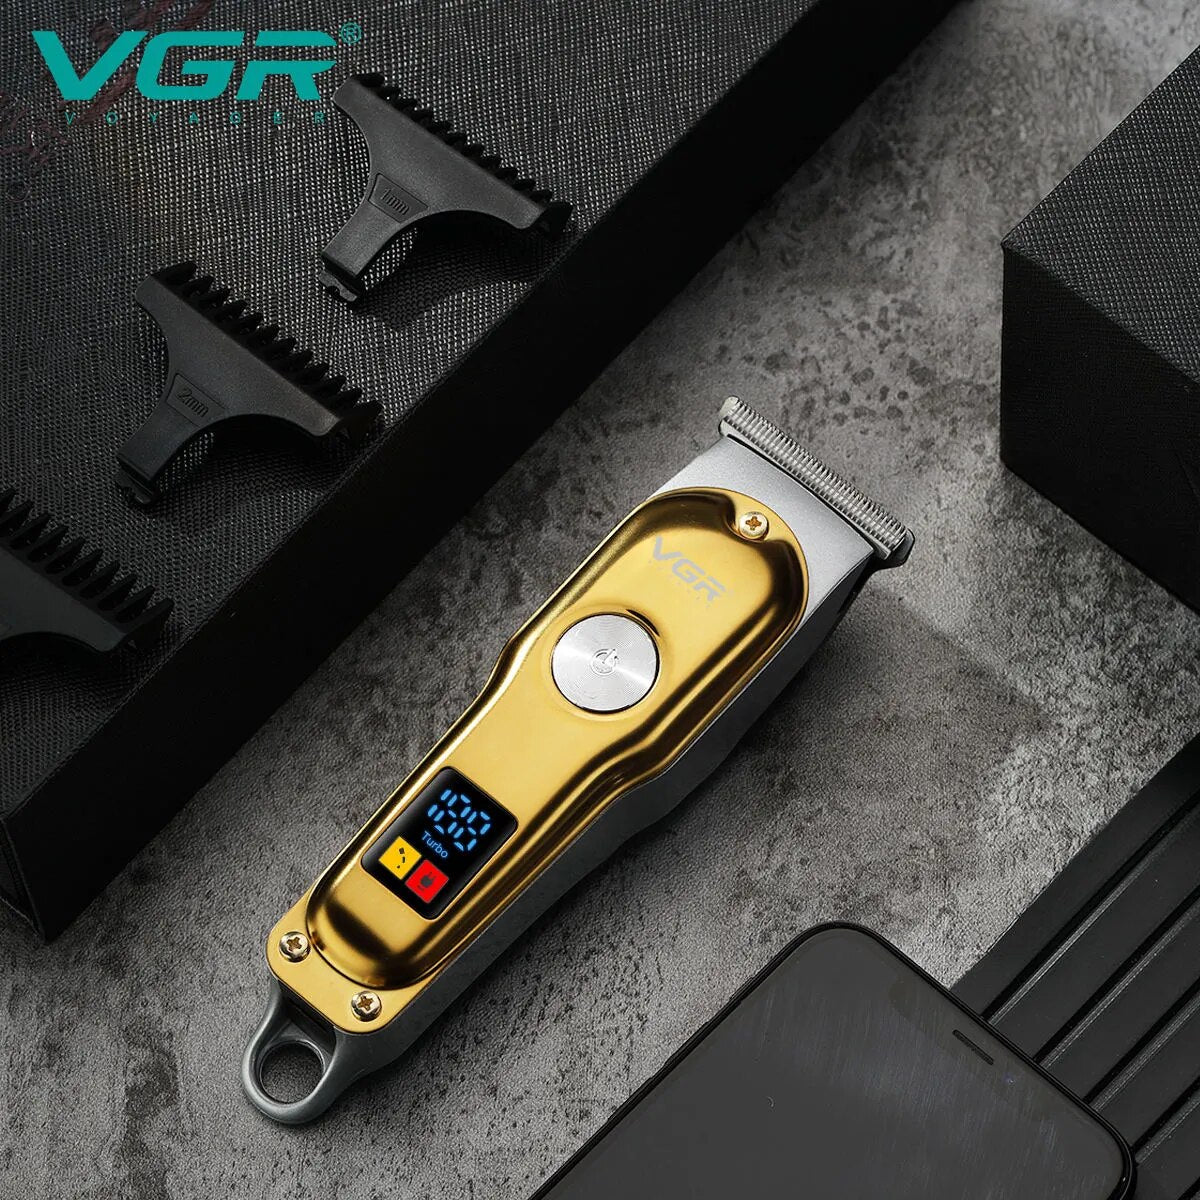 VGR-cortadora de pelo profesional para hombre, máquina eléctrica inalámbrica para cortar el pelo, ideal para peluquero, gran oferta, V-290